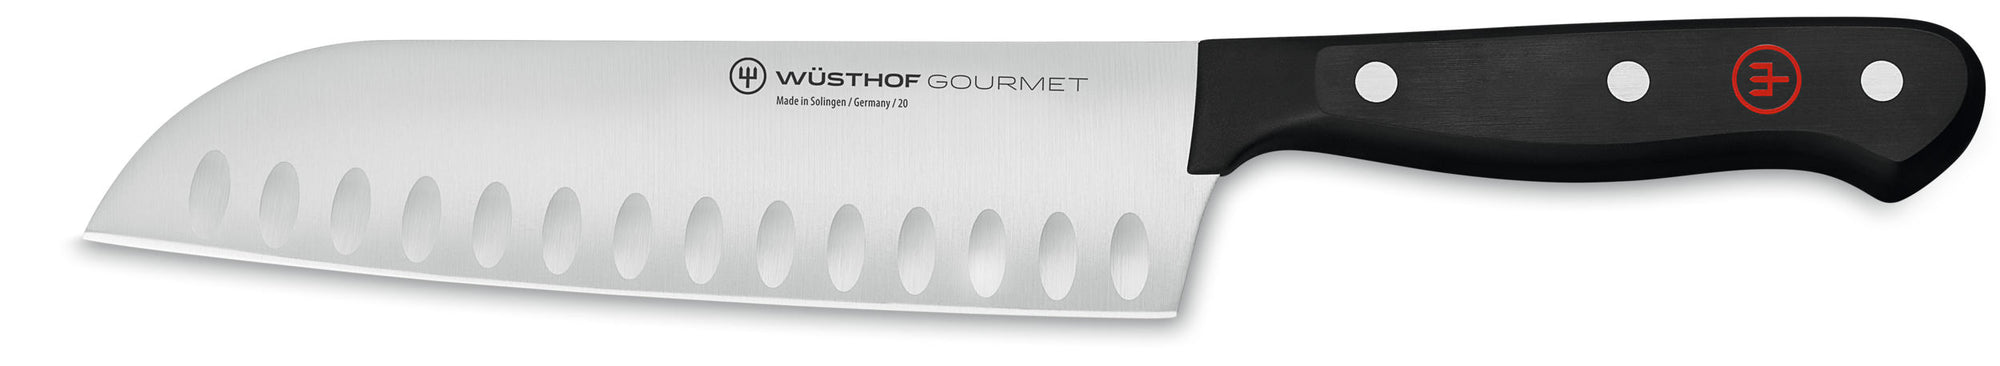 Wusthof Gourmet Santoku Knife, 7-inch (17 cm), Granton Edge - 4188-17